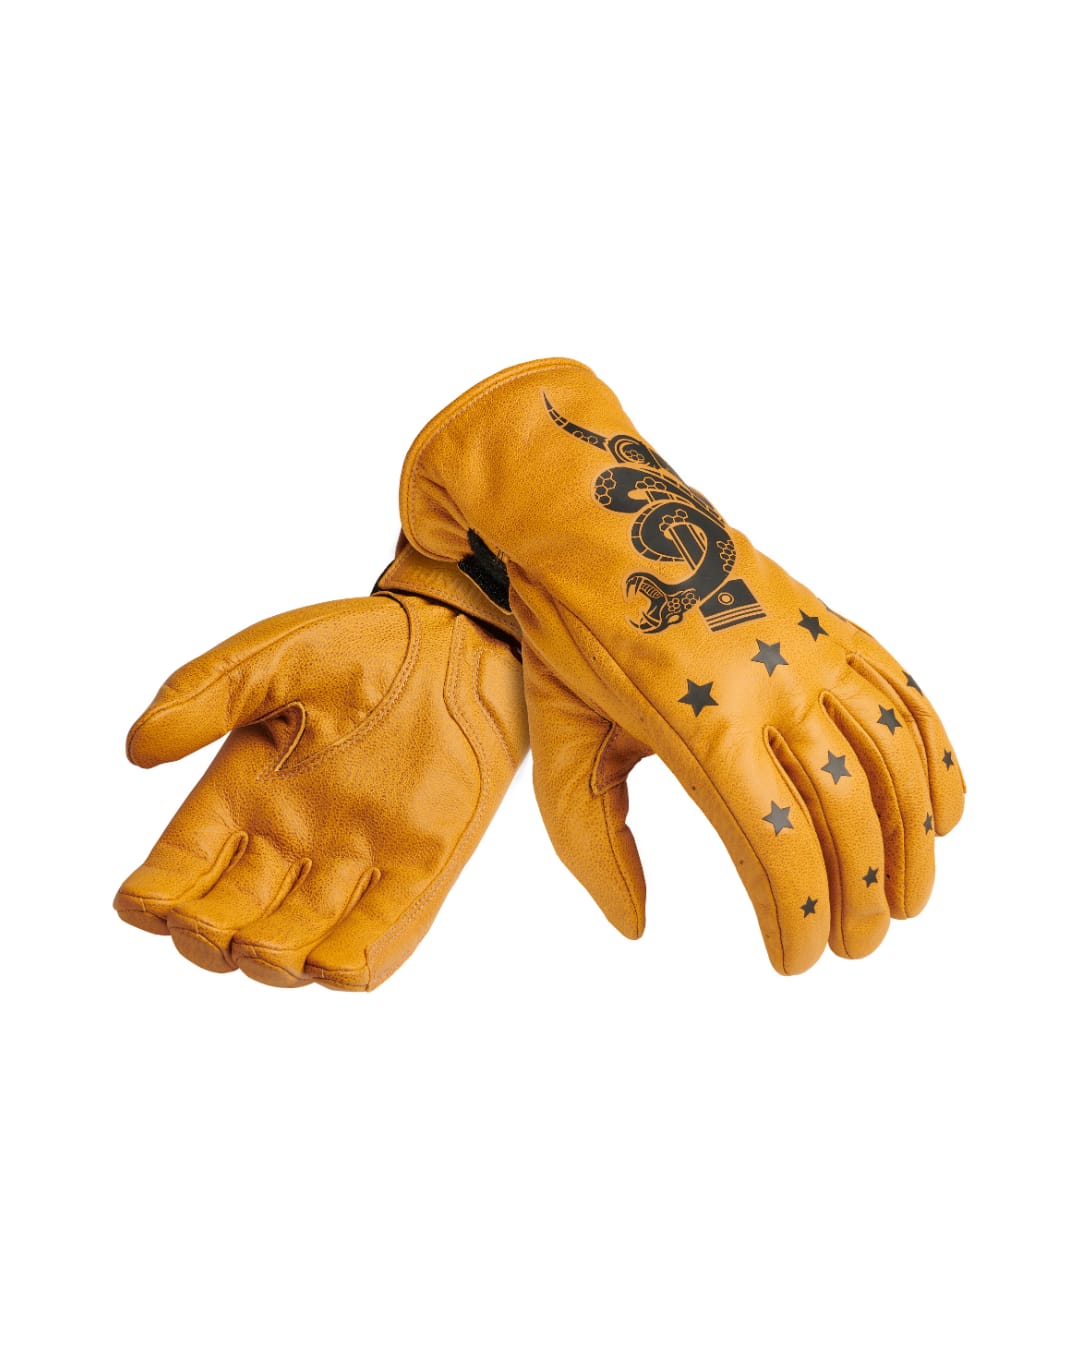 Spark Glove in Gold